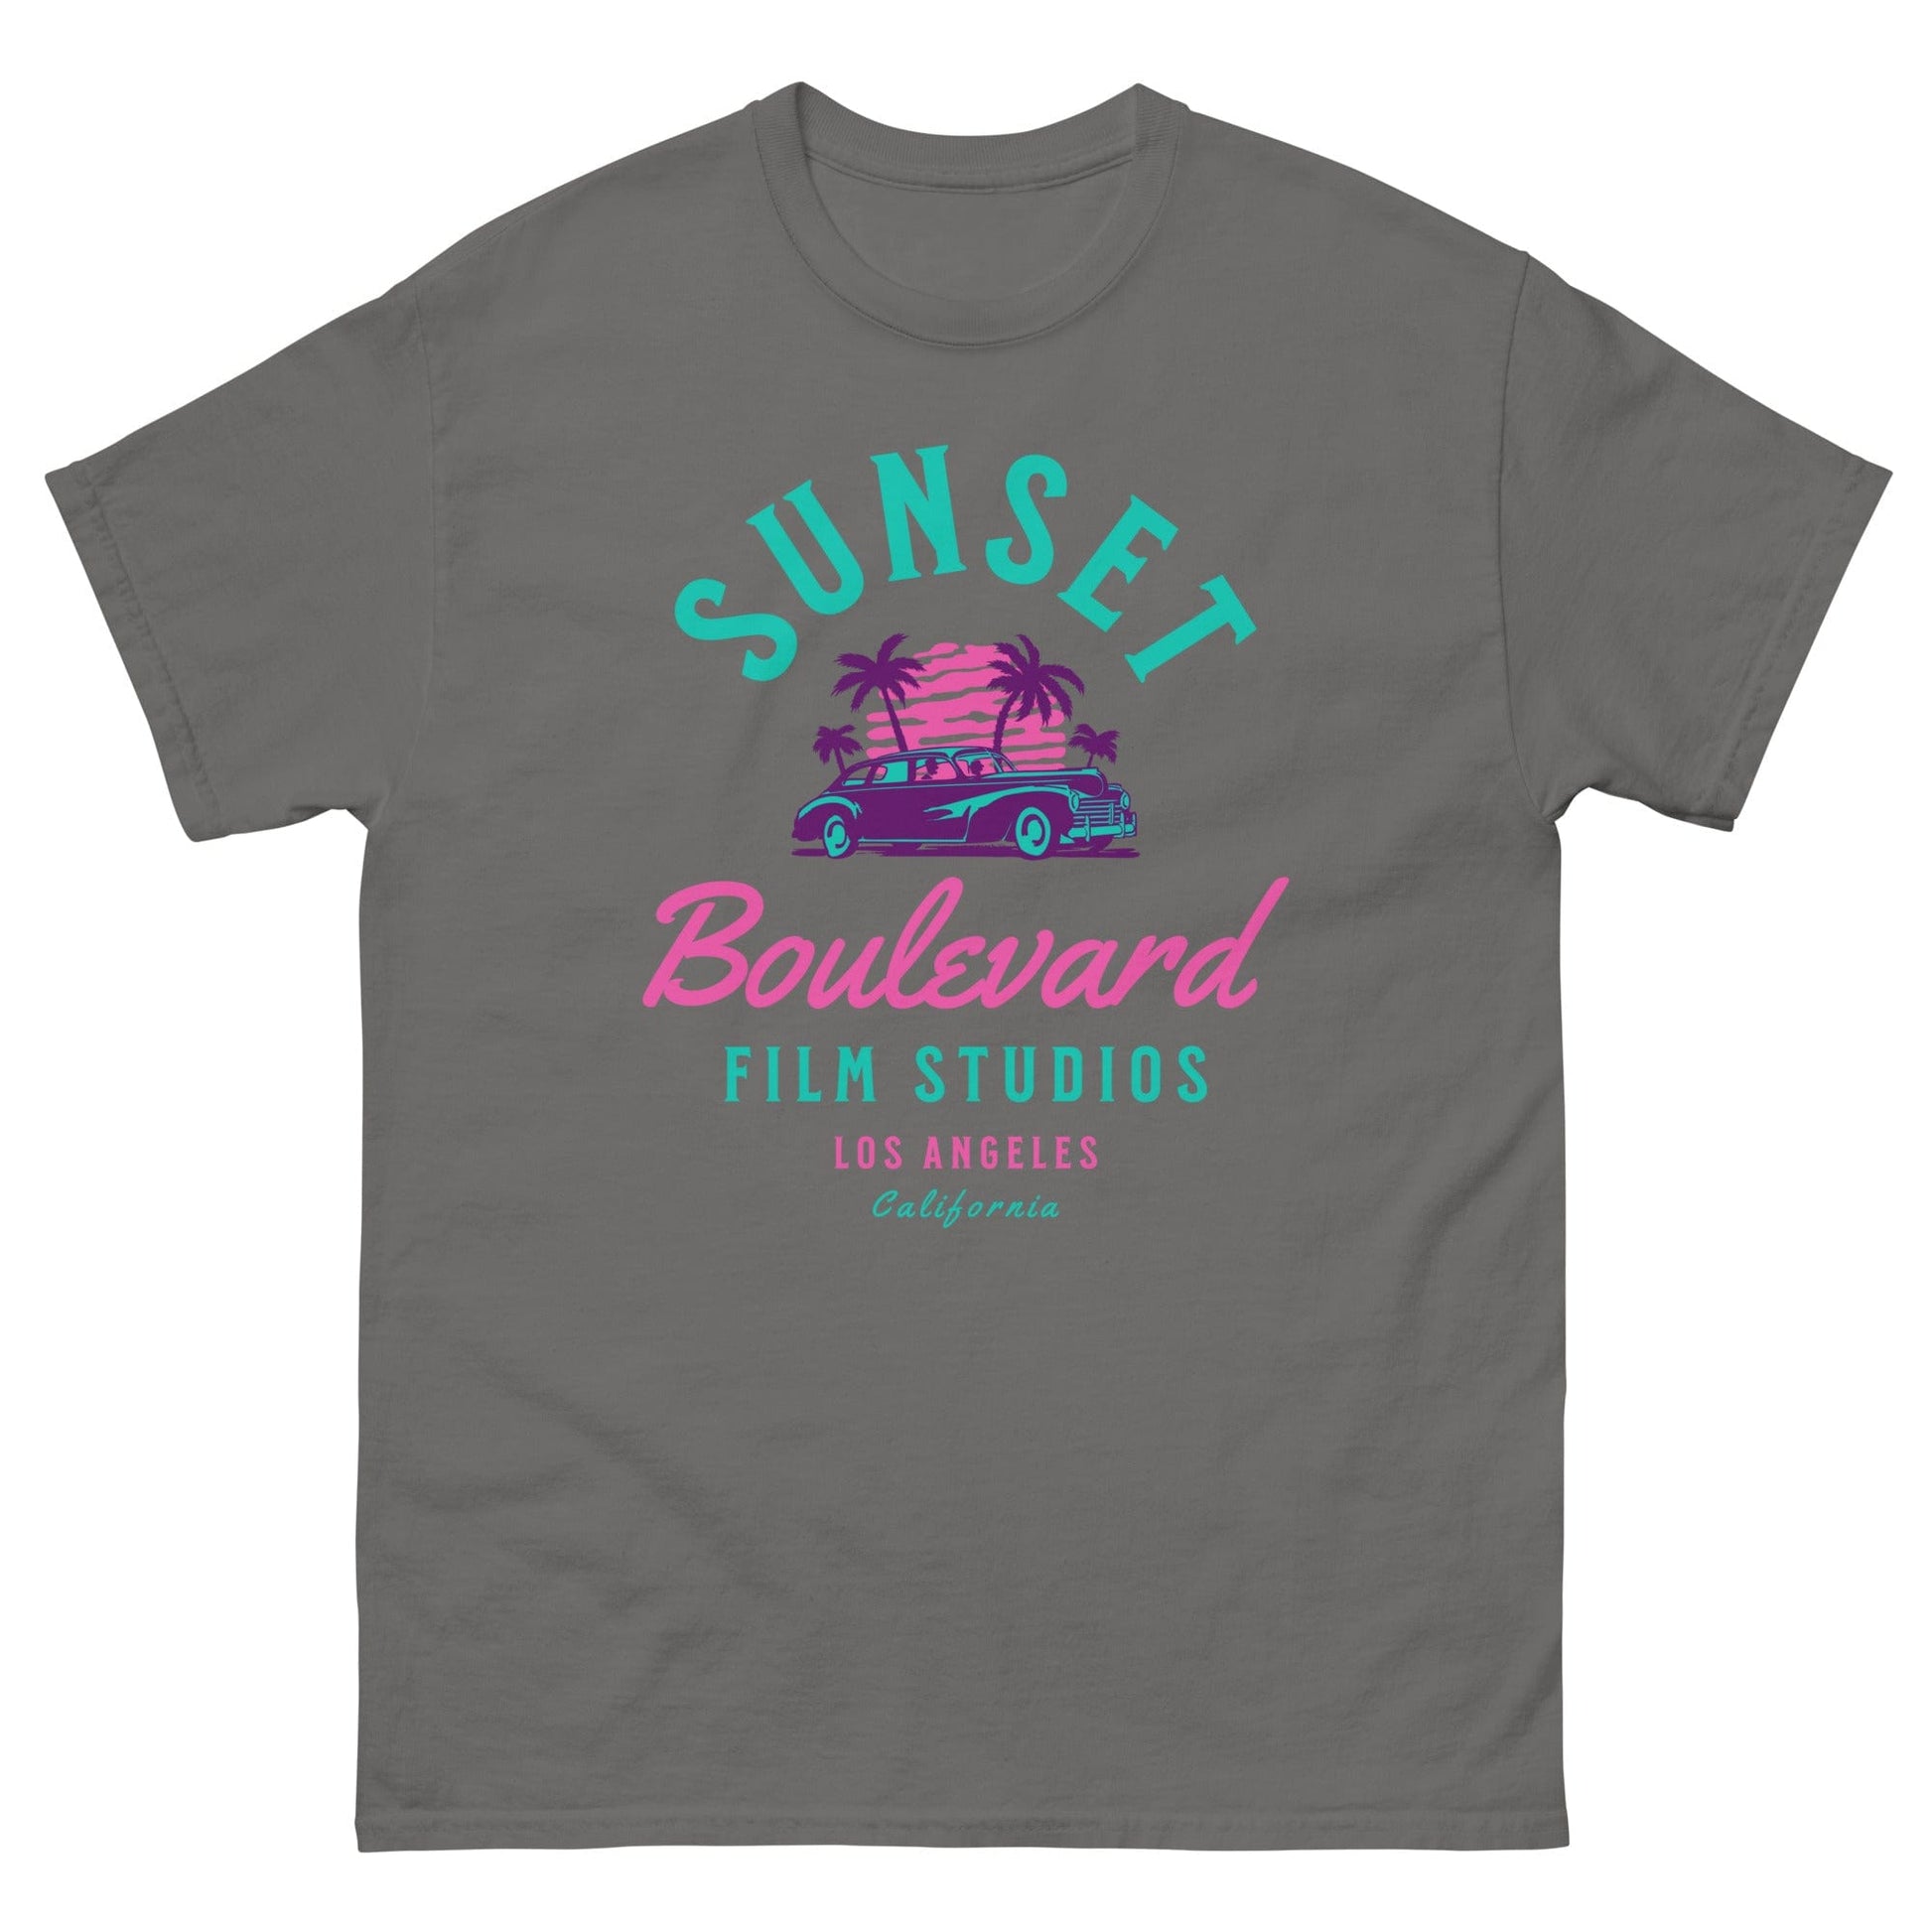 Sunset Boulevard Film Studios T-shirt Charcoal / S